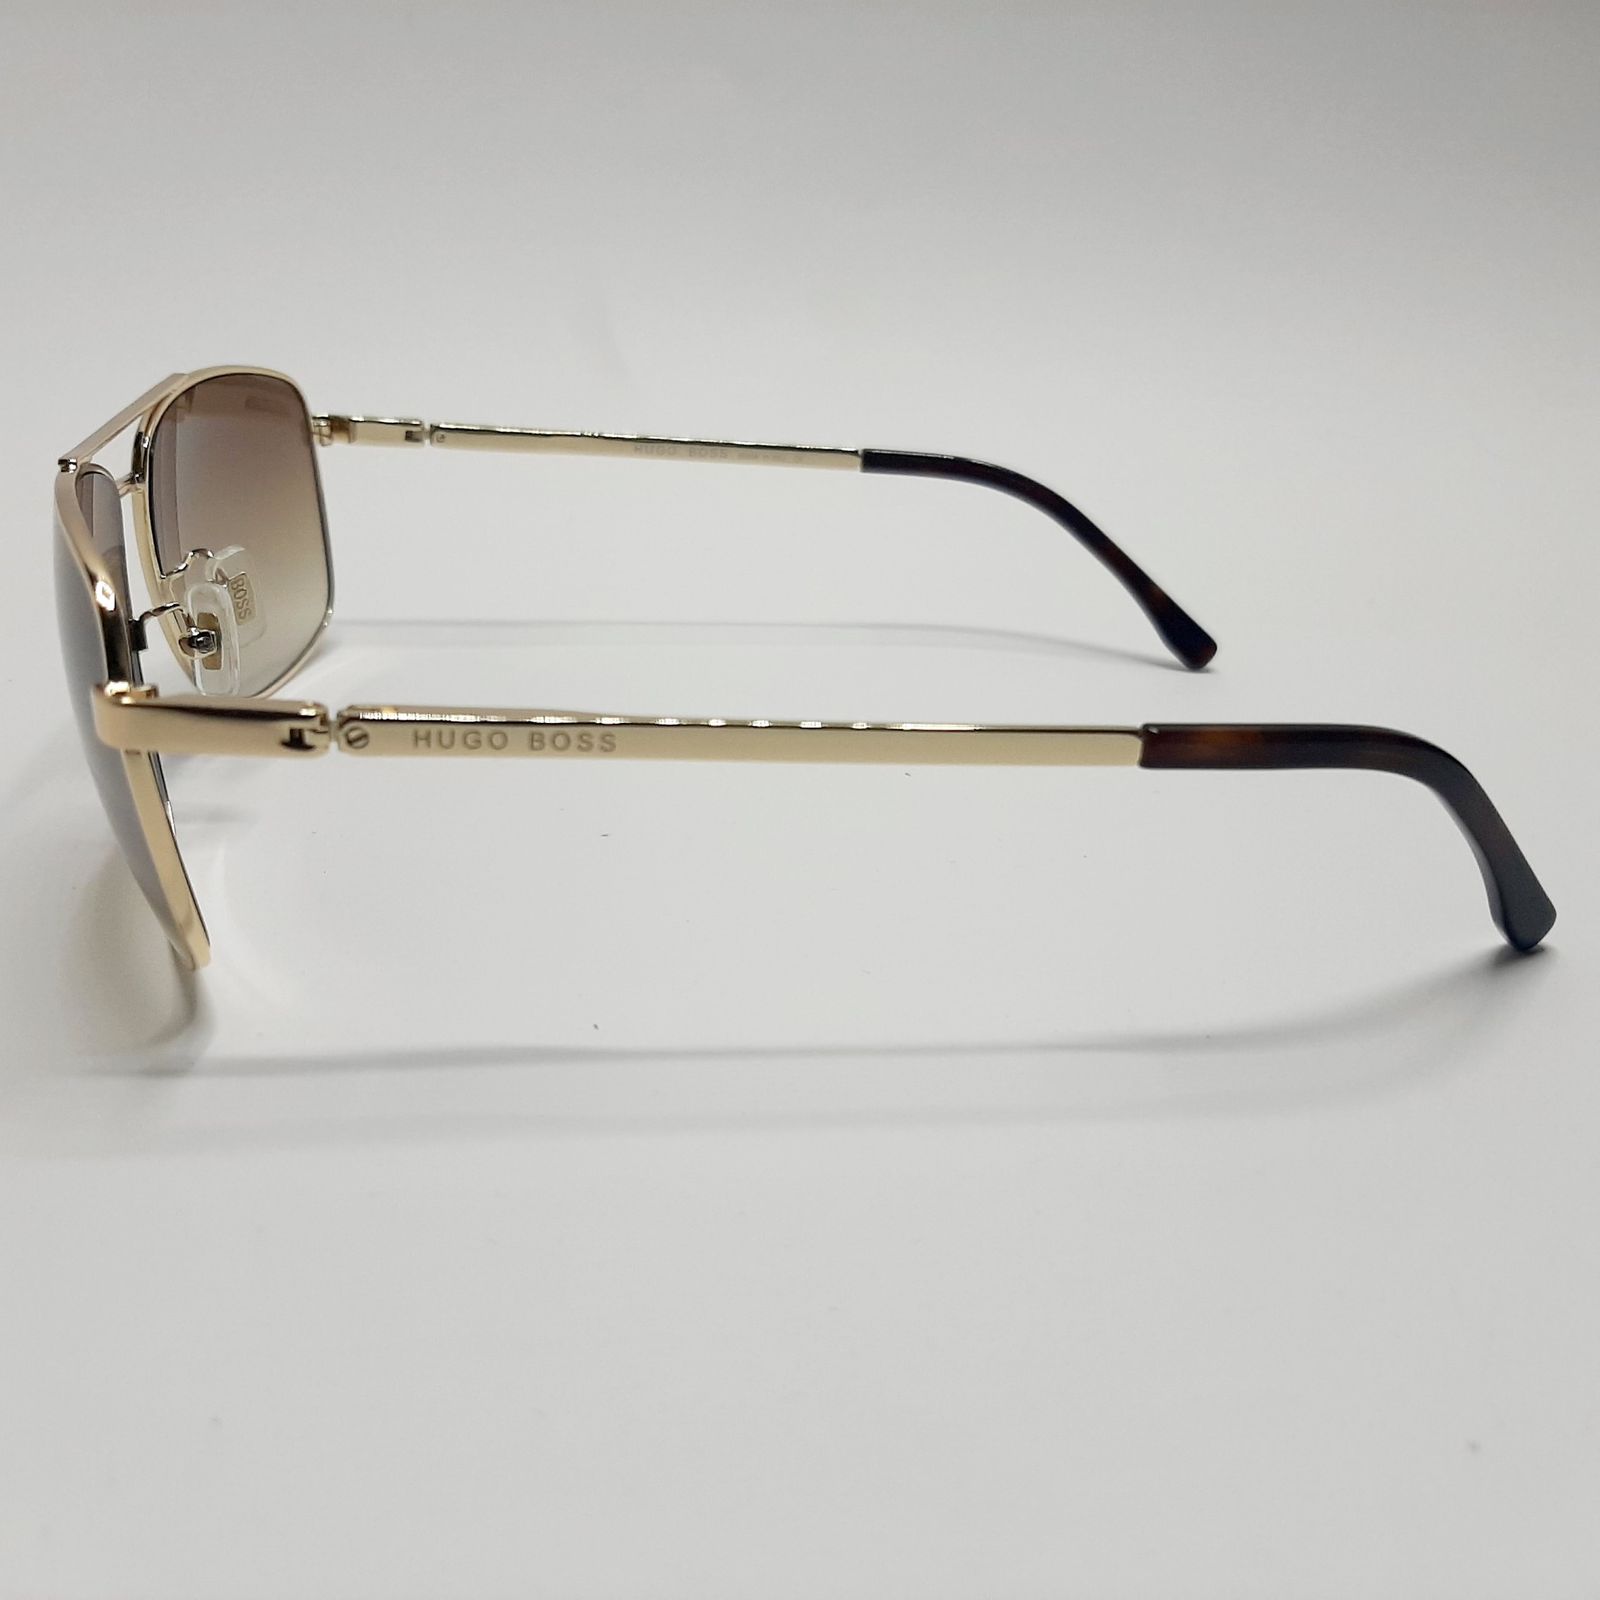 عینک آفتابی هوگو باس مدل HB1073c1 -  - 4